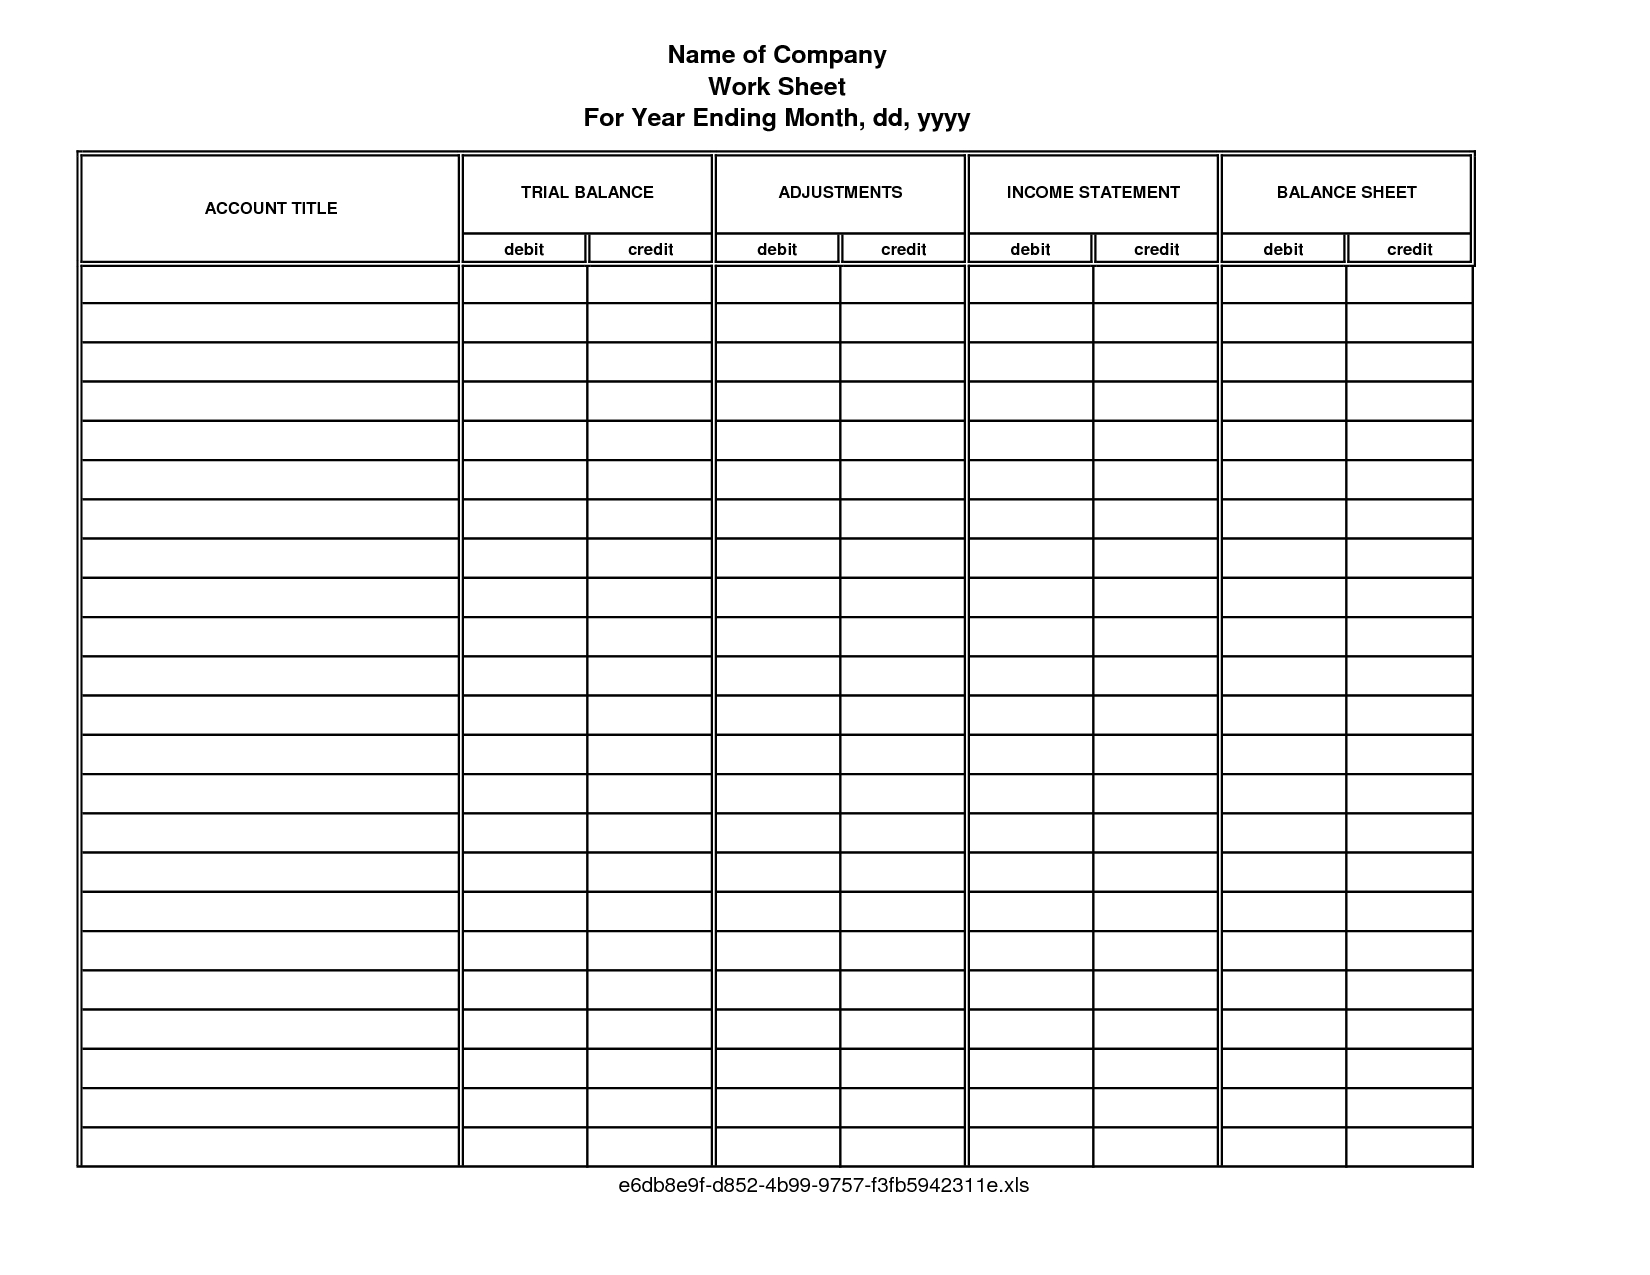 Tally Sheet Excel Emplate Beautiful Pipe Spreadsheet Inside Blank Ledger Template